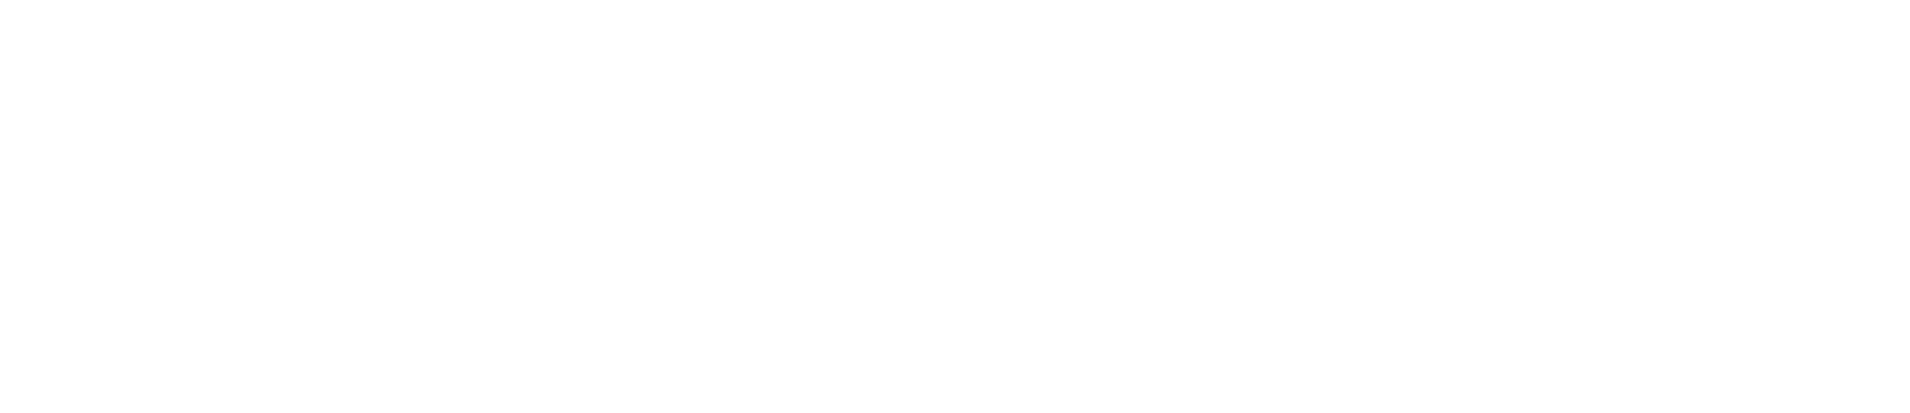 DBVC - Deutscher Bundesverband Coaching - zertifiziert als Professional Coach